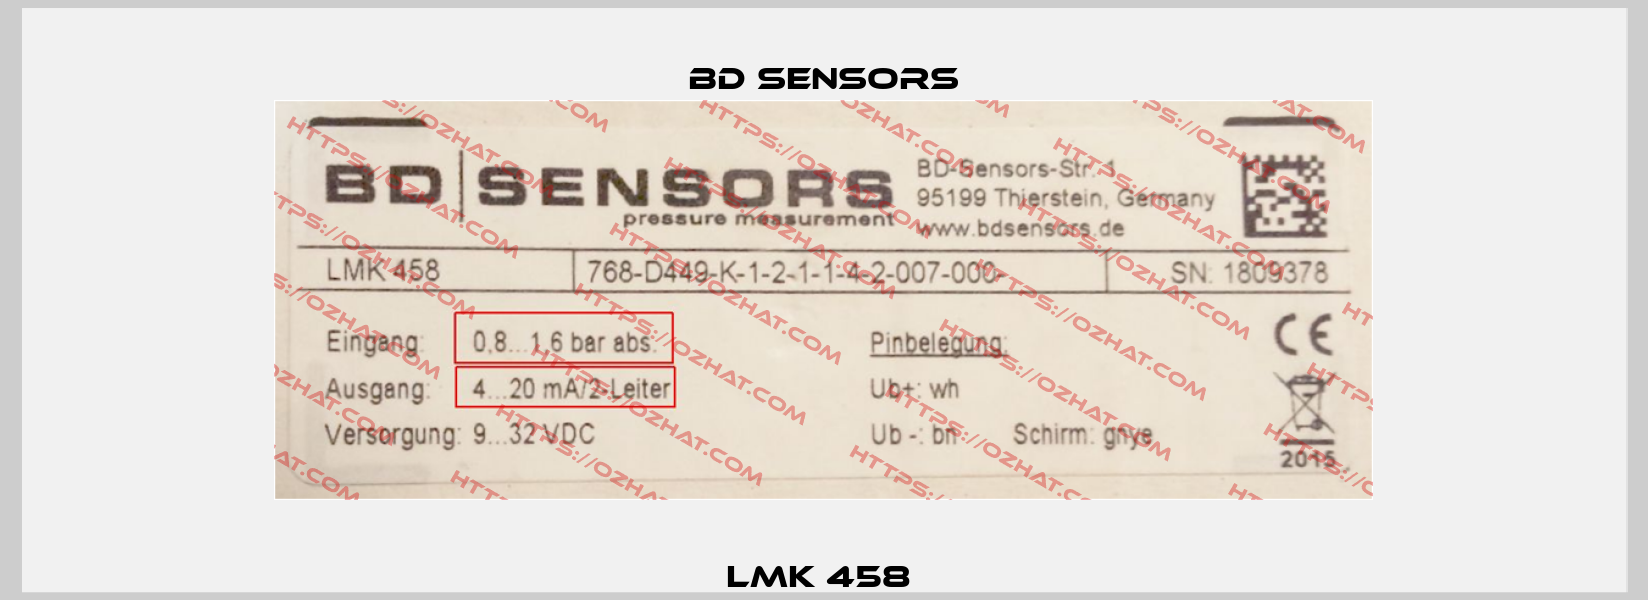 LMK 458  Bd Sensors